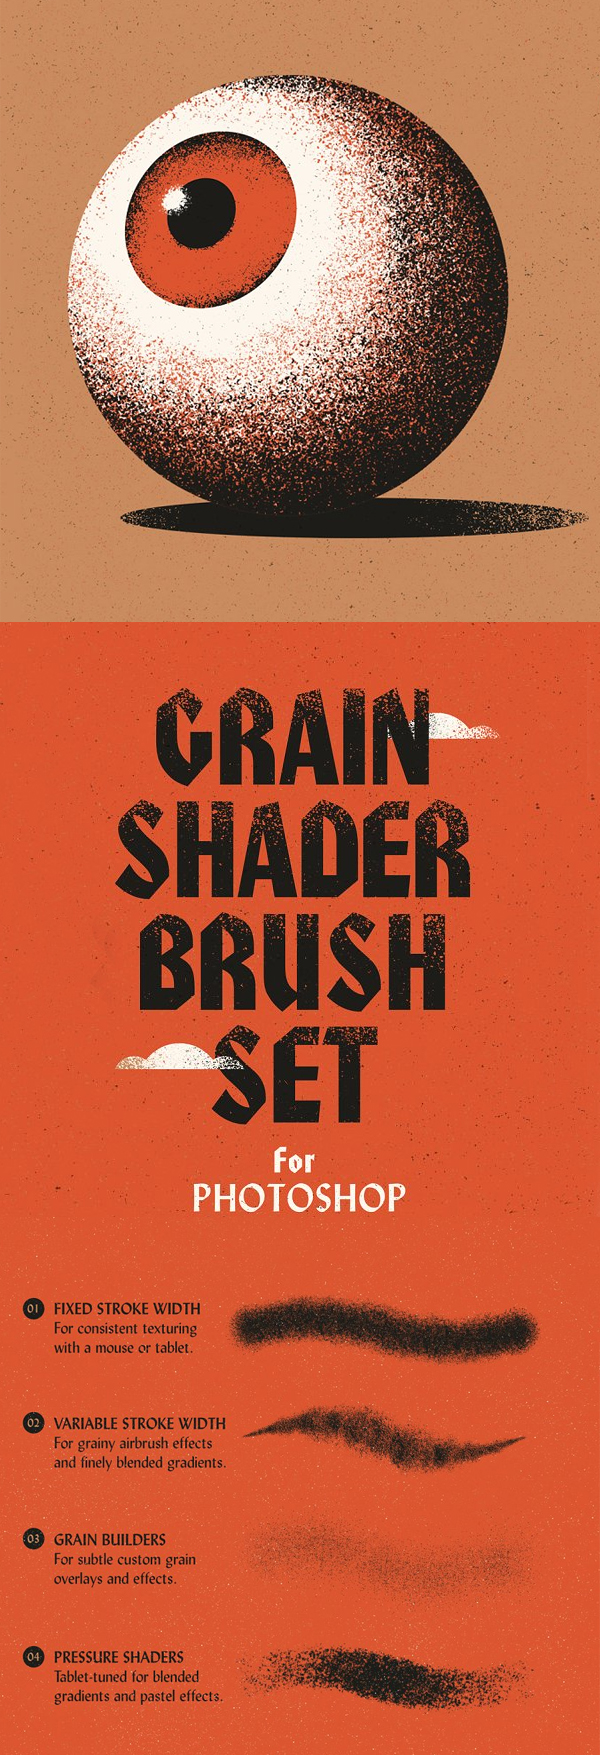 Grain Shader Brush Set for Photoshop